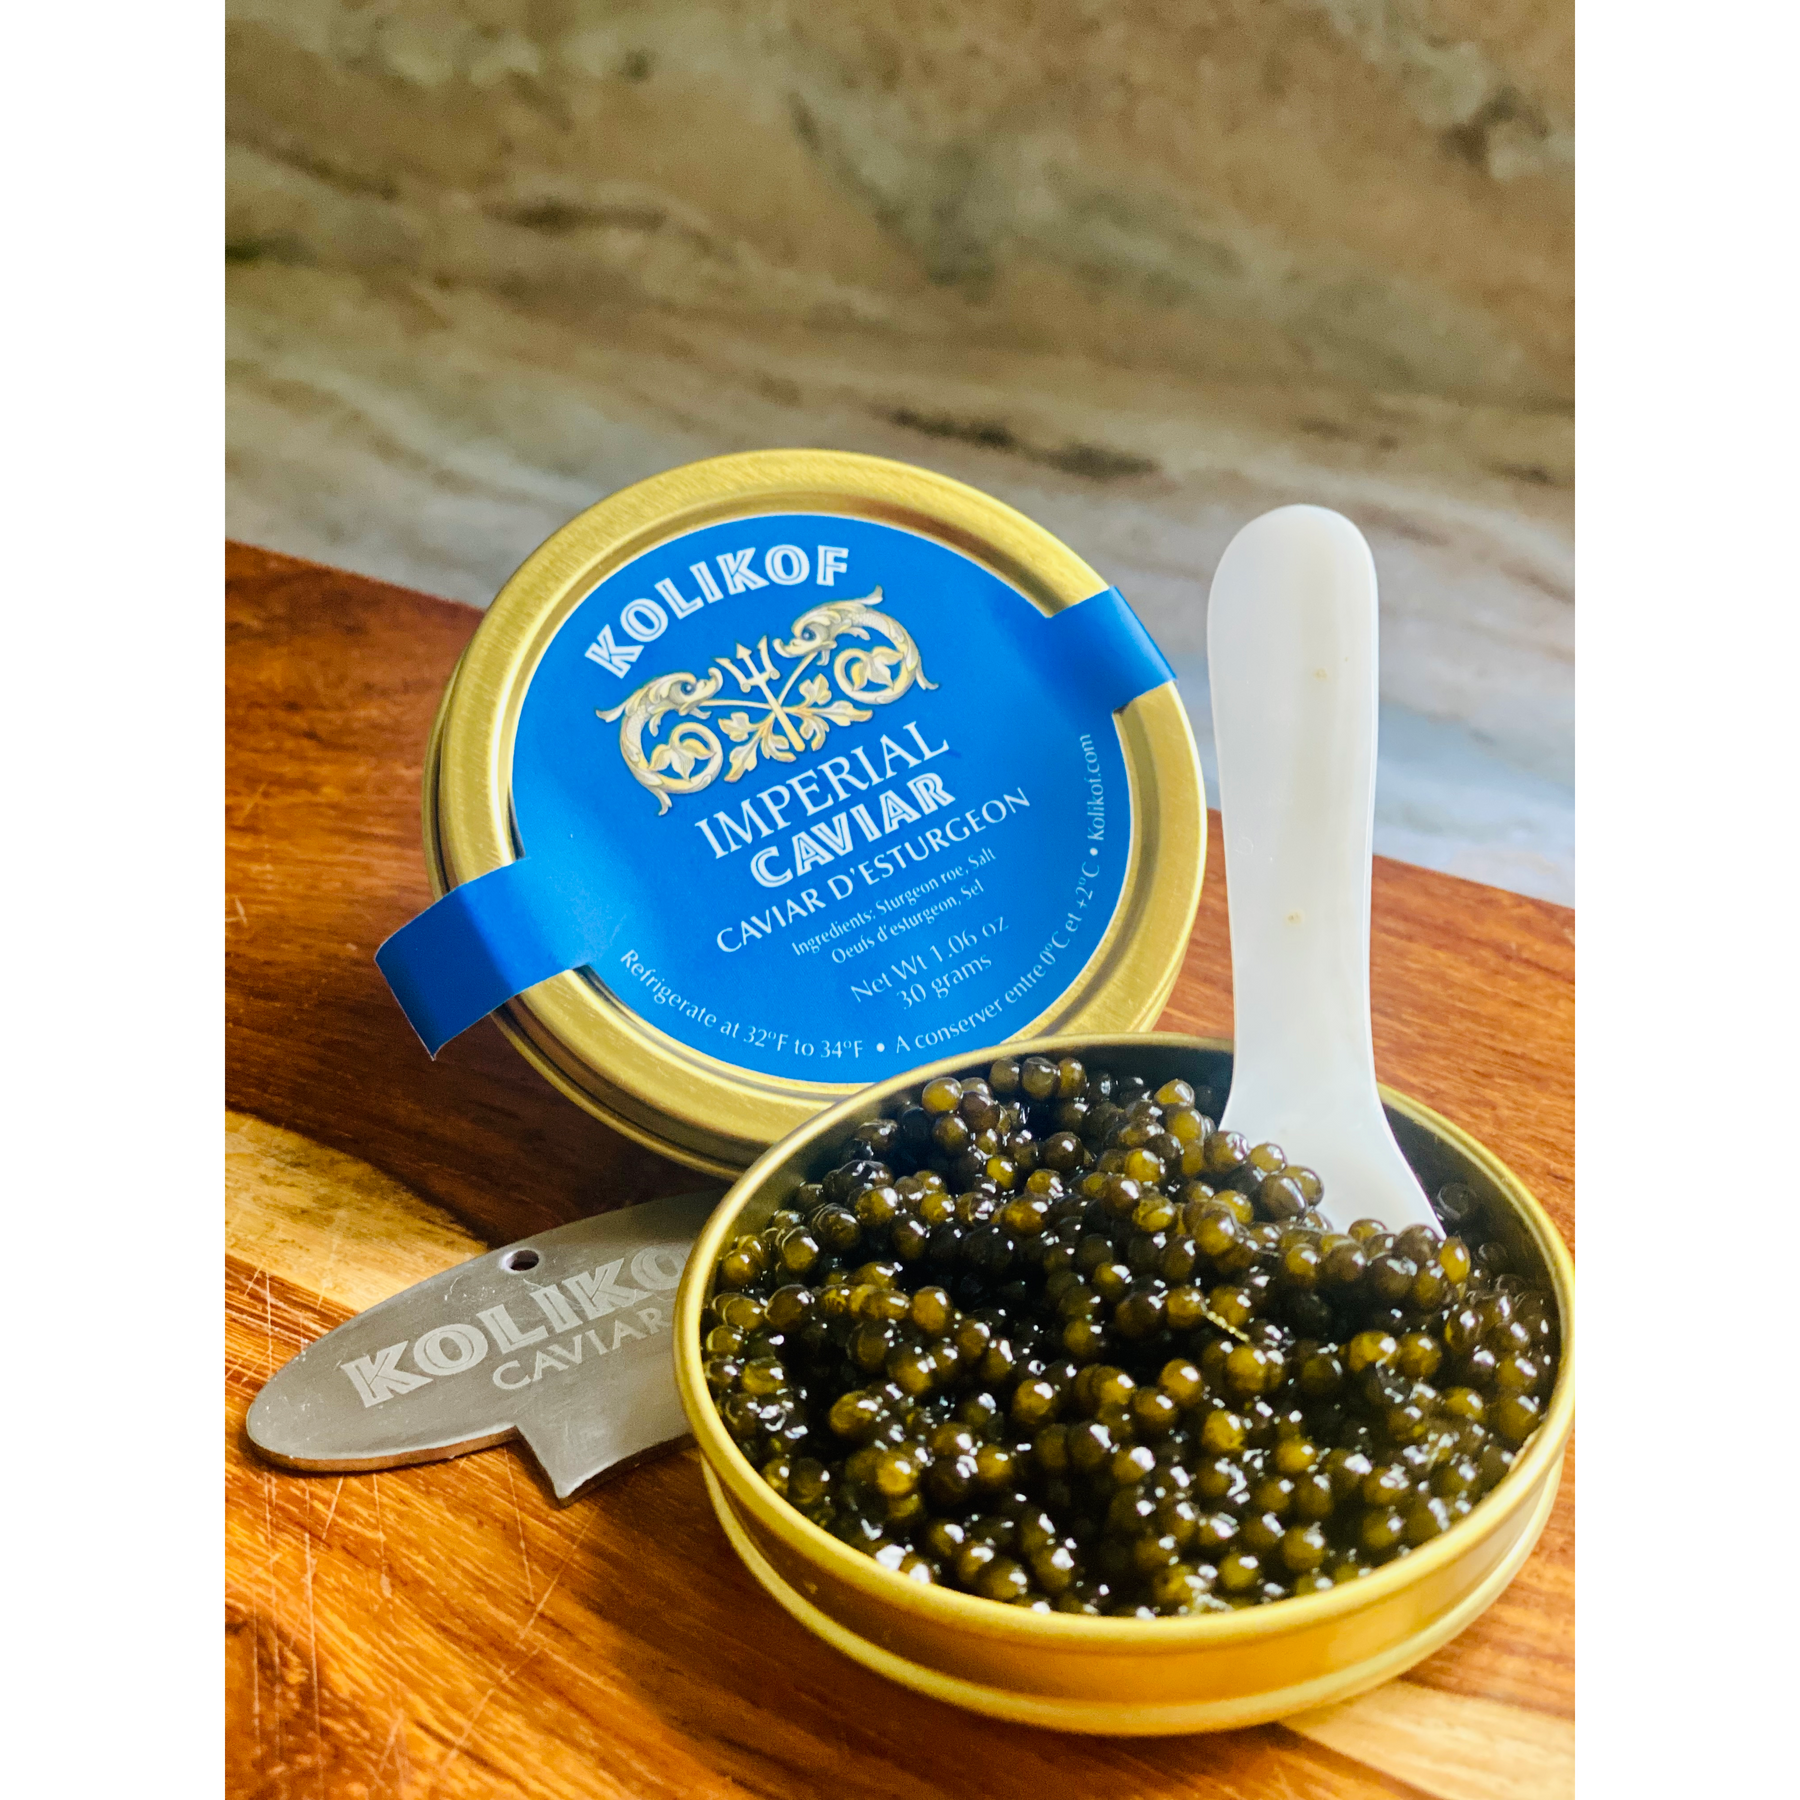 Gourmet Fondue Lovers Set - Kolikof Caviar & Gourmet Foods